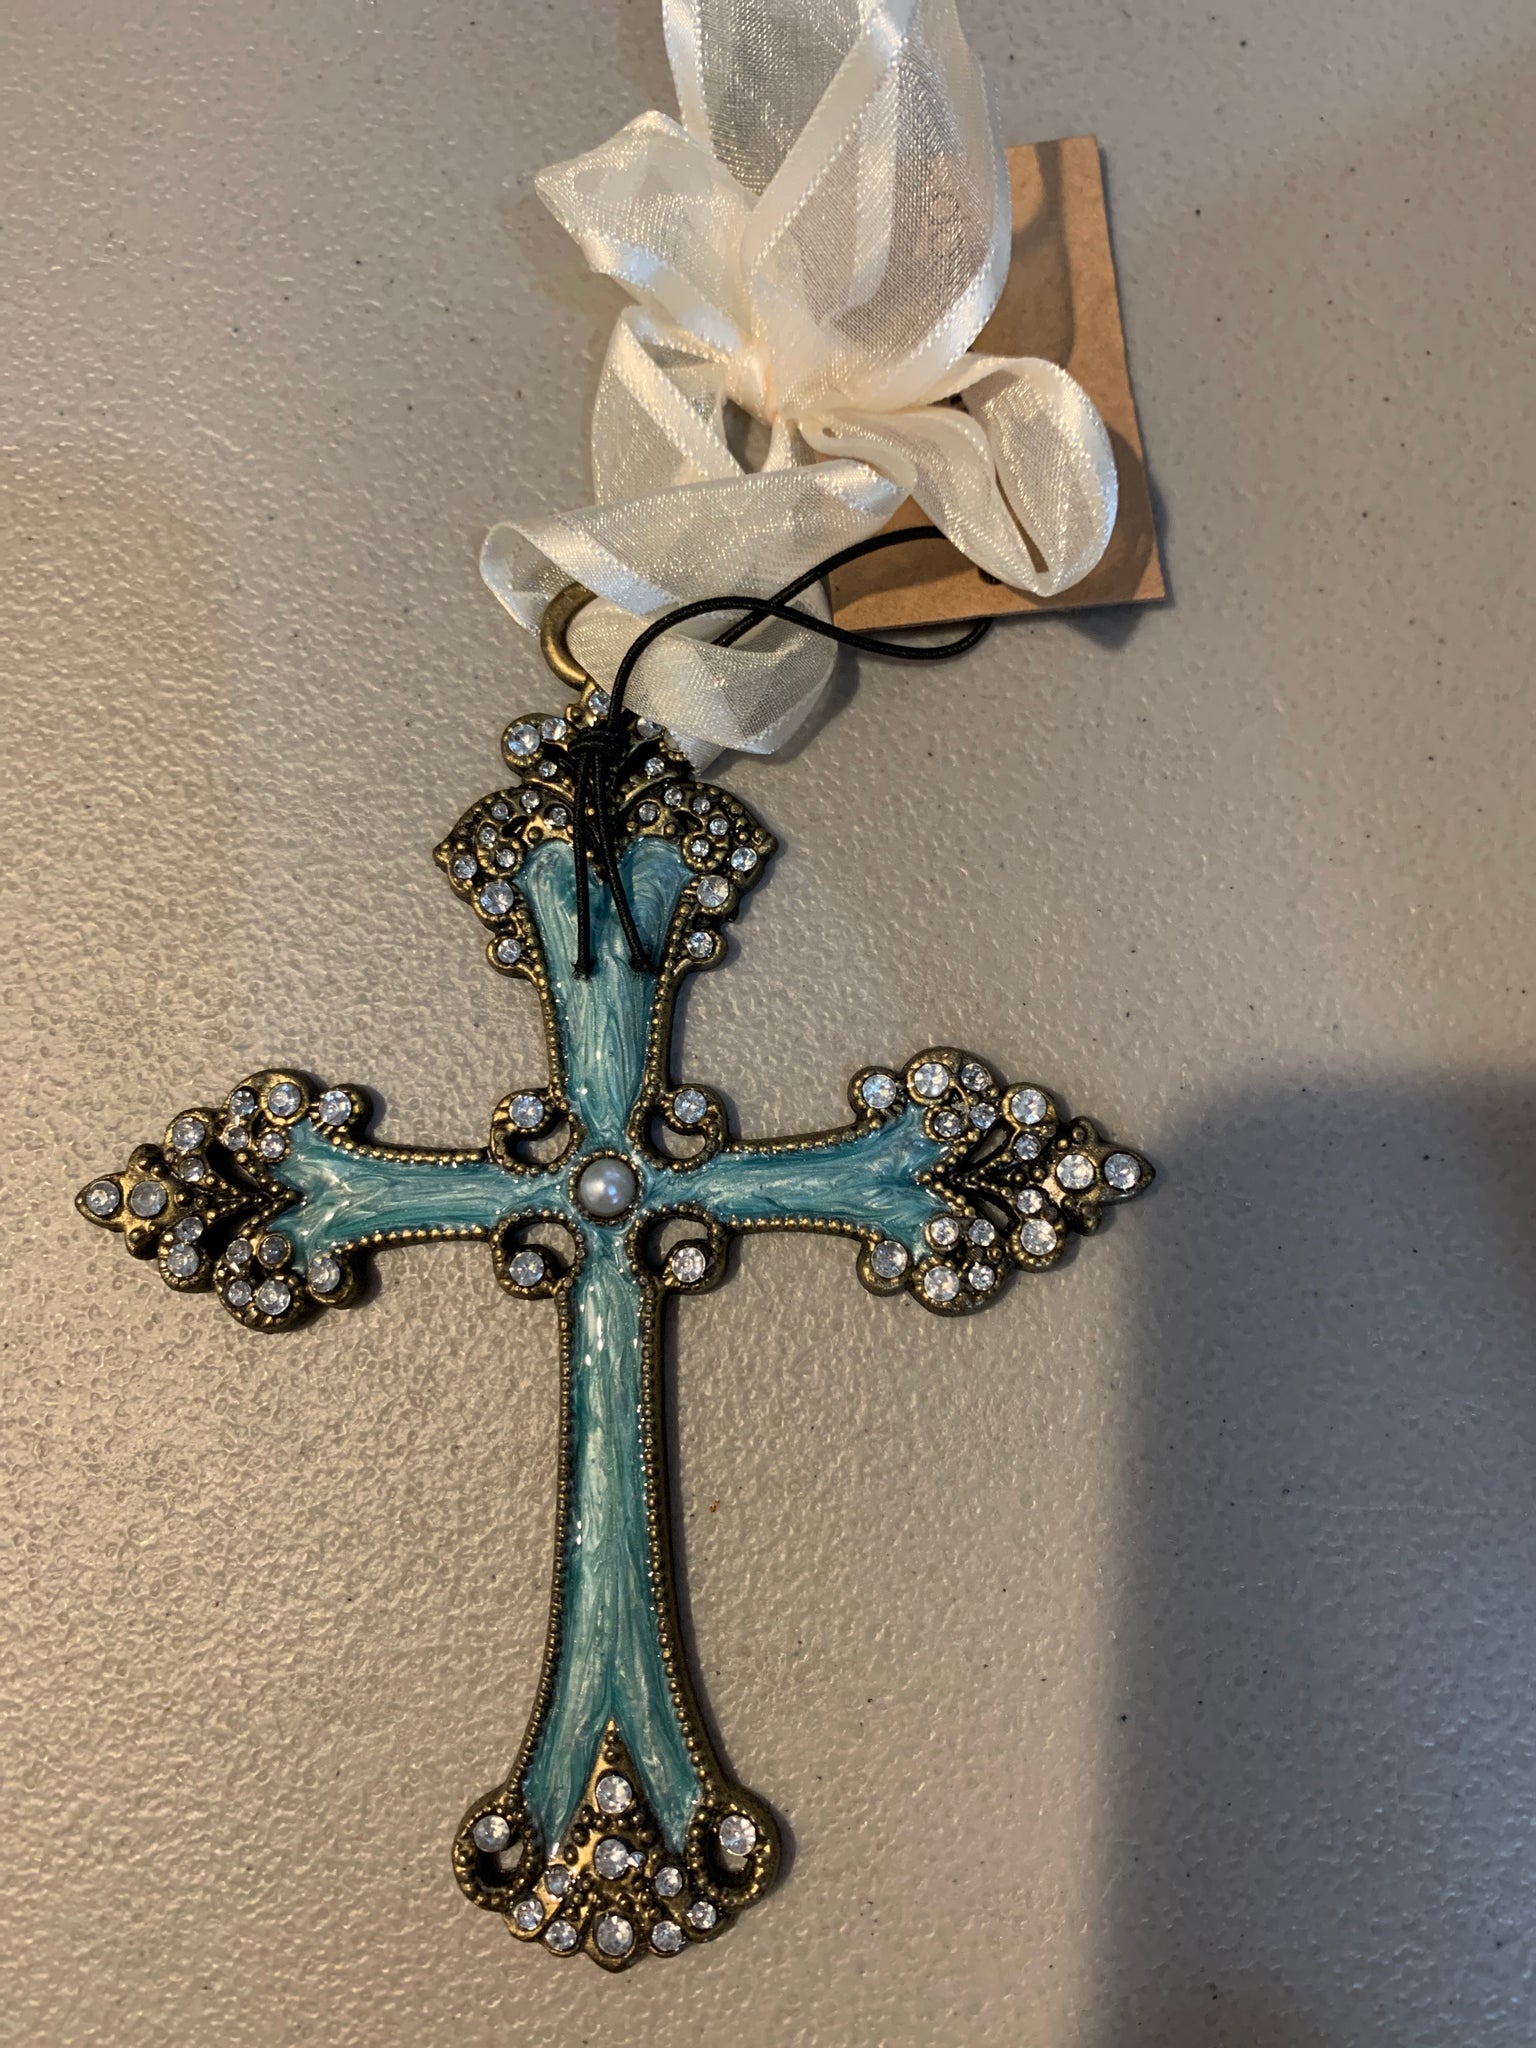 Pewter cross ornament